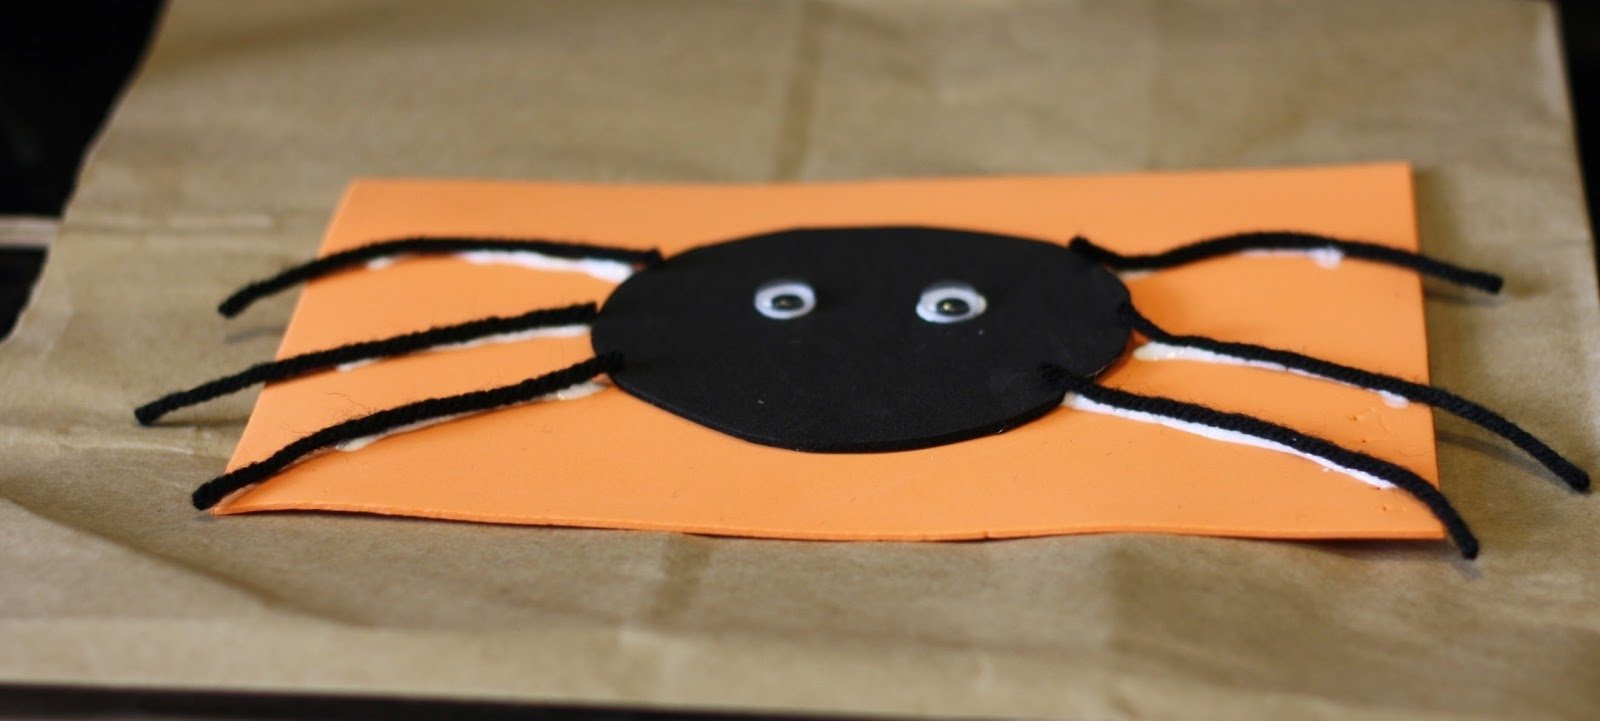 Halloween Craft Ideas Preschool
 10 Elegant Halloween Craft Ideas For Preschoolers 2019